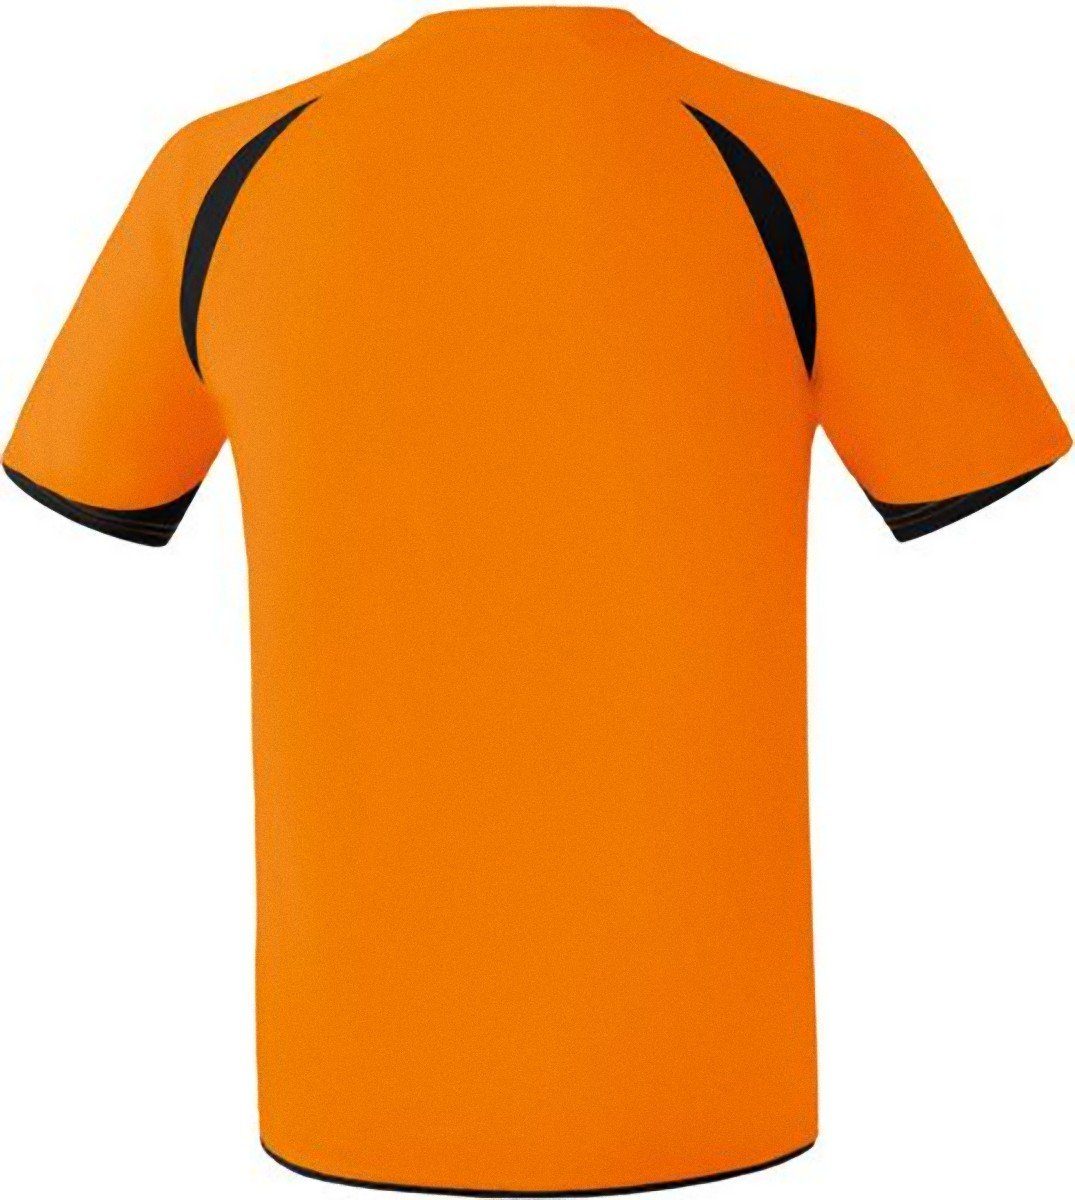 Funktionsshirt Shirt Laufshirt Sportshirt Tanaro Fussball T-Shirt Funktionsshirt Handball Erima Orange Trikot